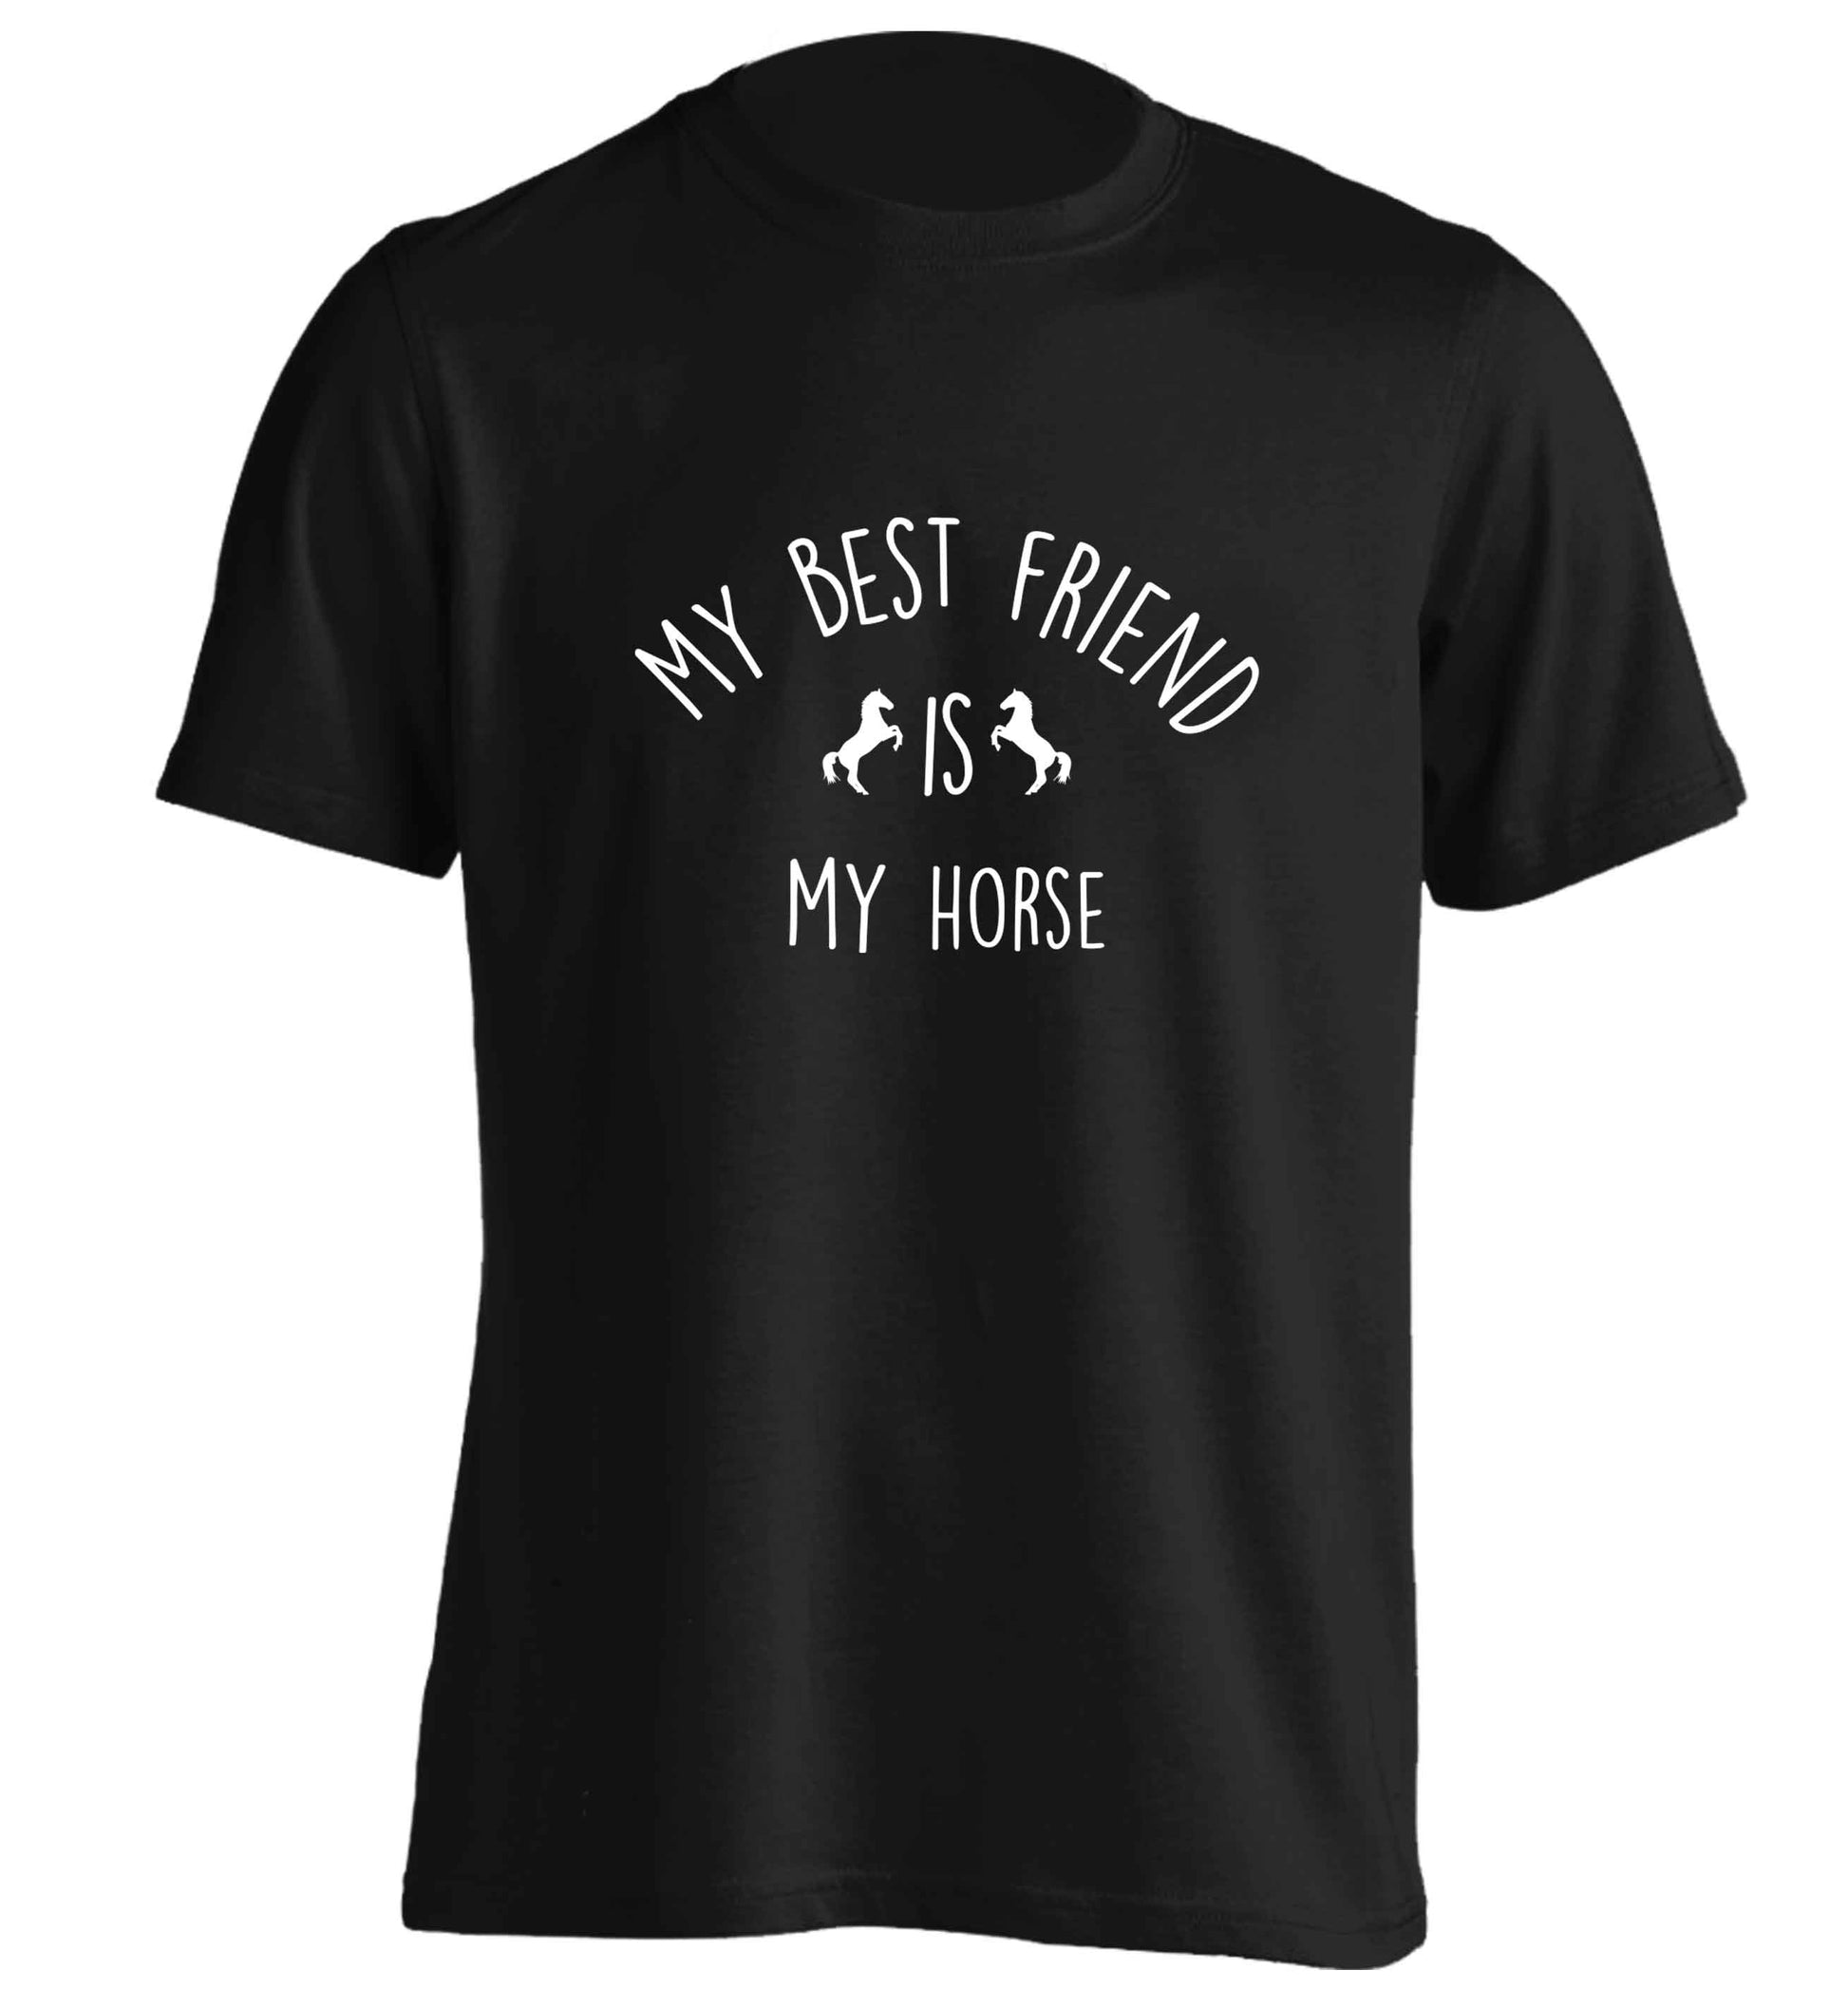 My best friend is my horse adults unisex black Tshirt 2XL